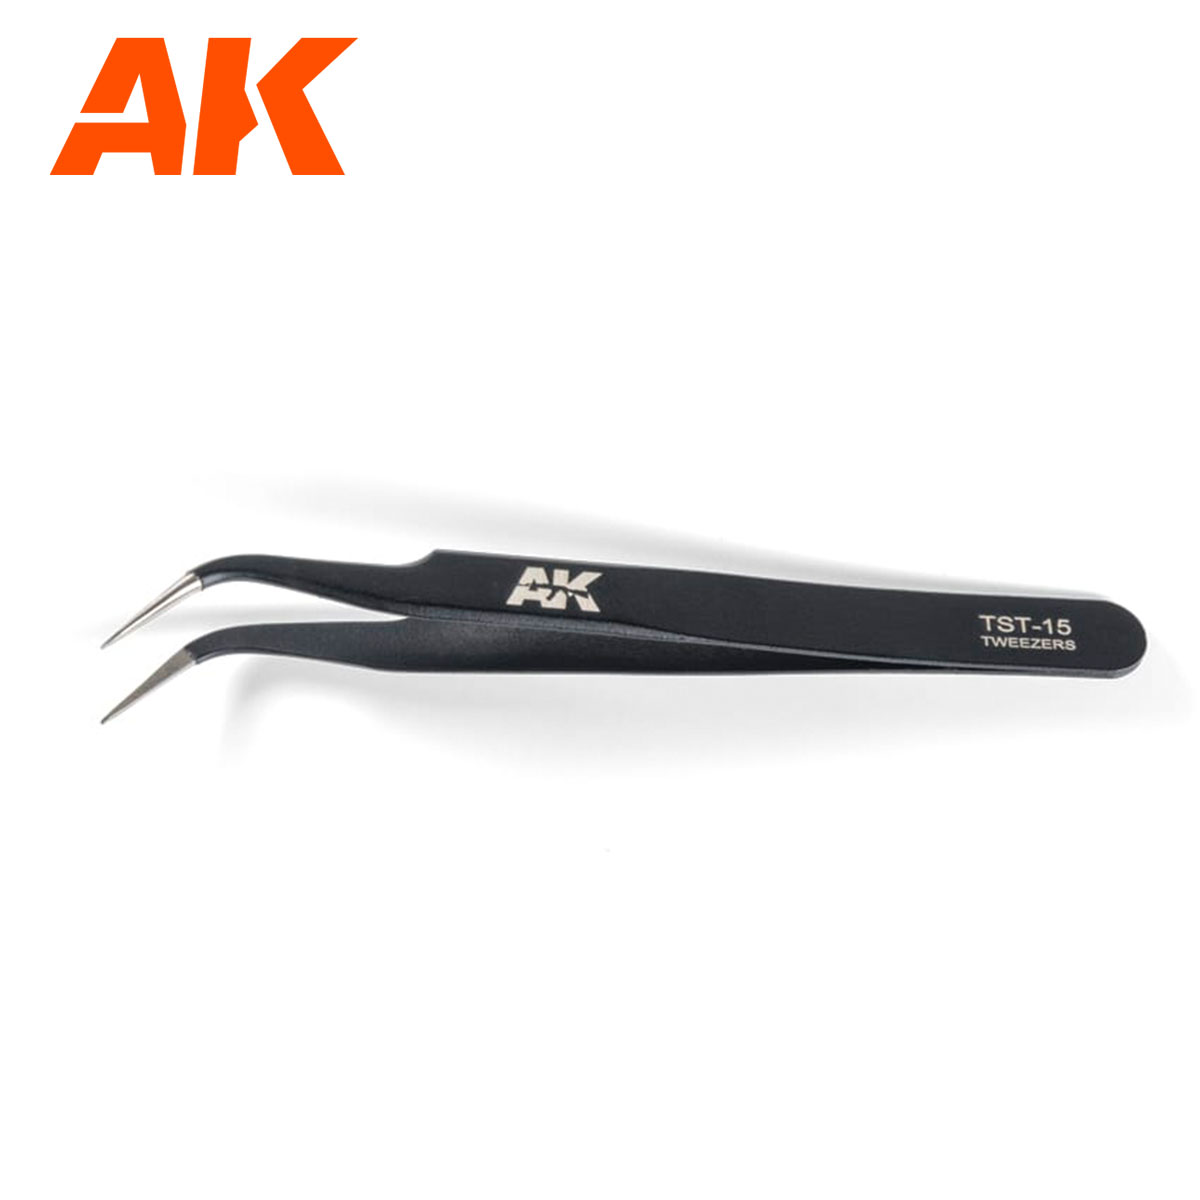 AK Interactive Precise CURVED TWEEZERS Tool #AK9007